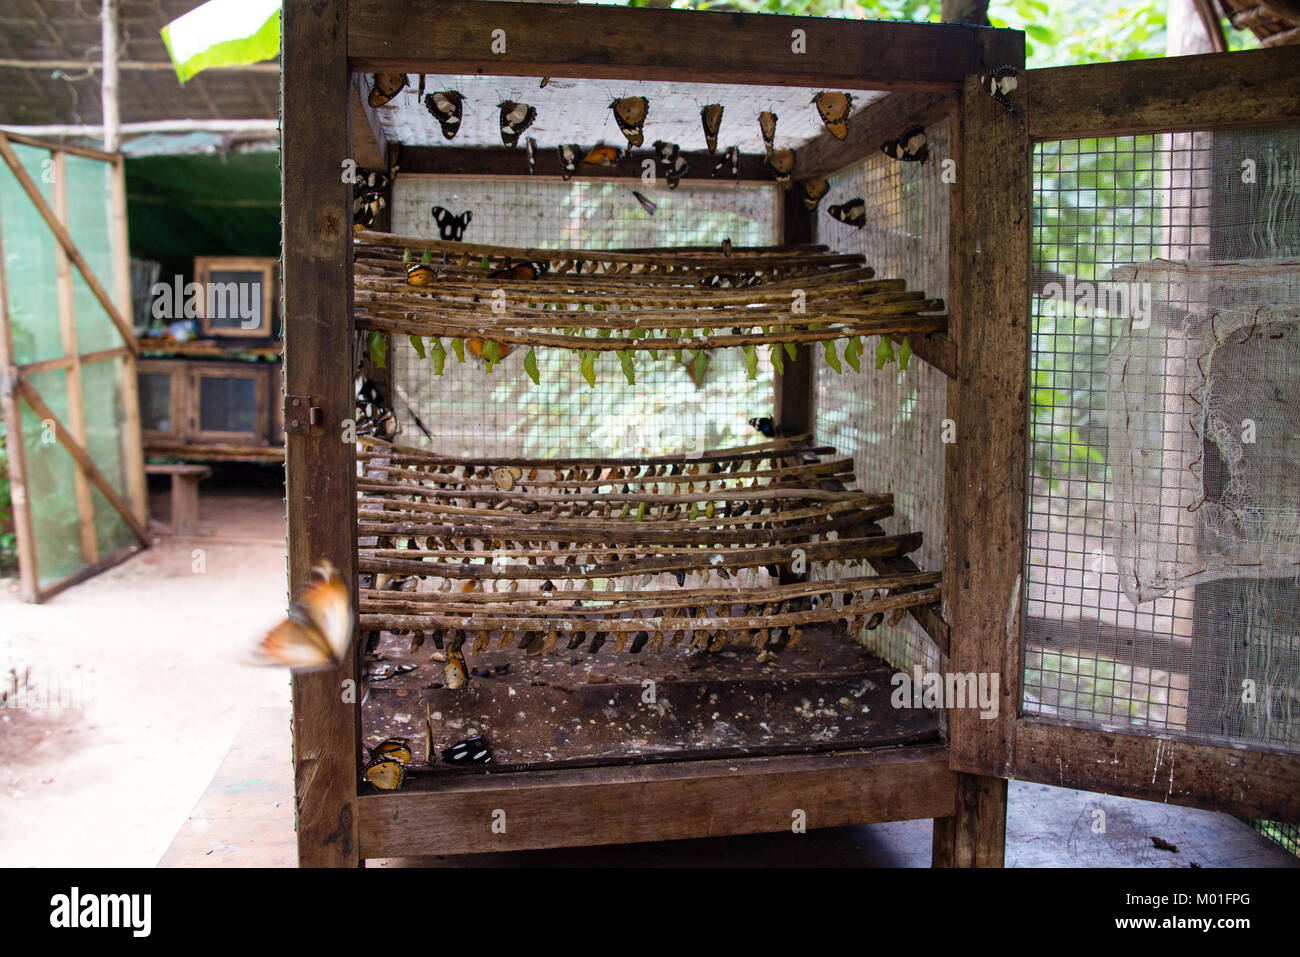 Butterfly egg hatching unit in Butterfly farm, Zanzibar, Tanzania Stock Photo